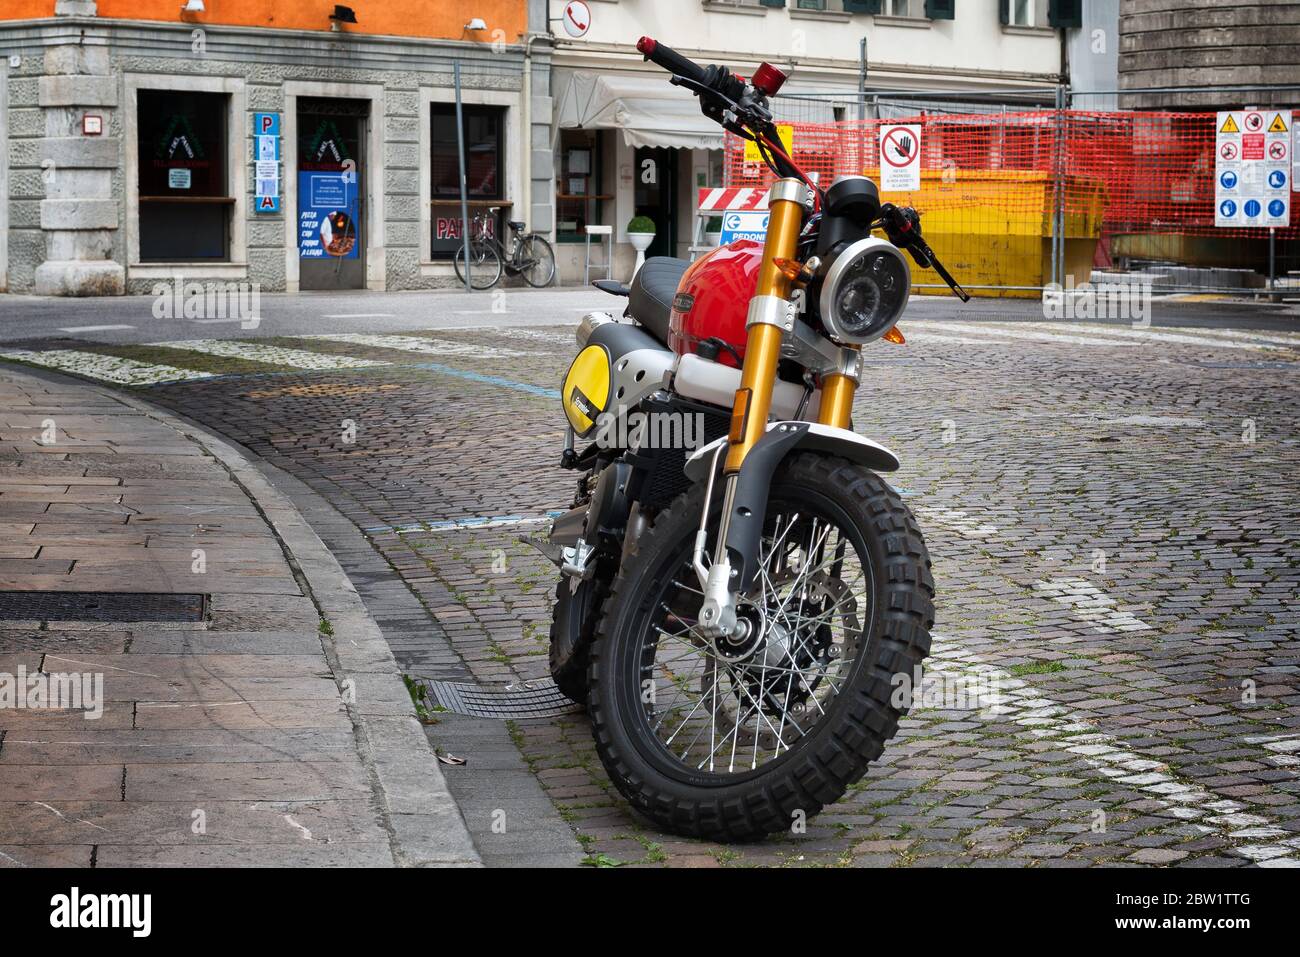 Fantic Caballero Scrambler 500 cc motorbike. Modern motorbike with a beautiful retro design. Stock Photo